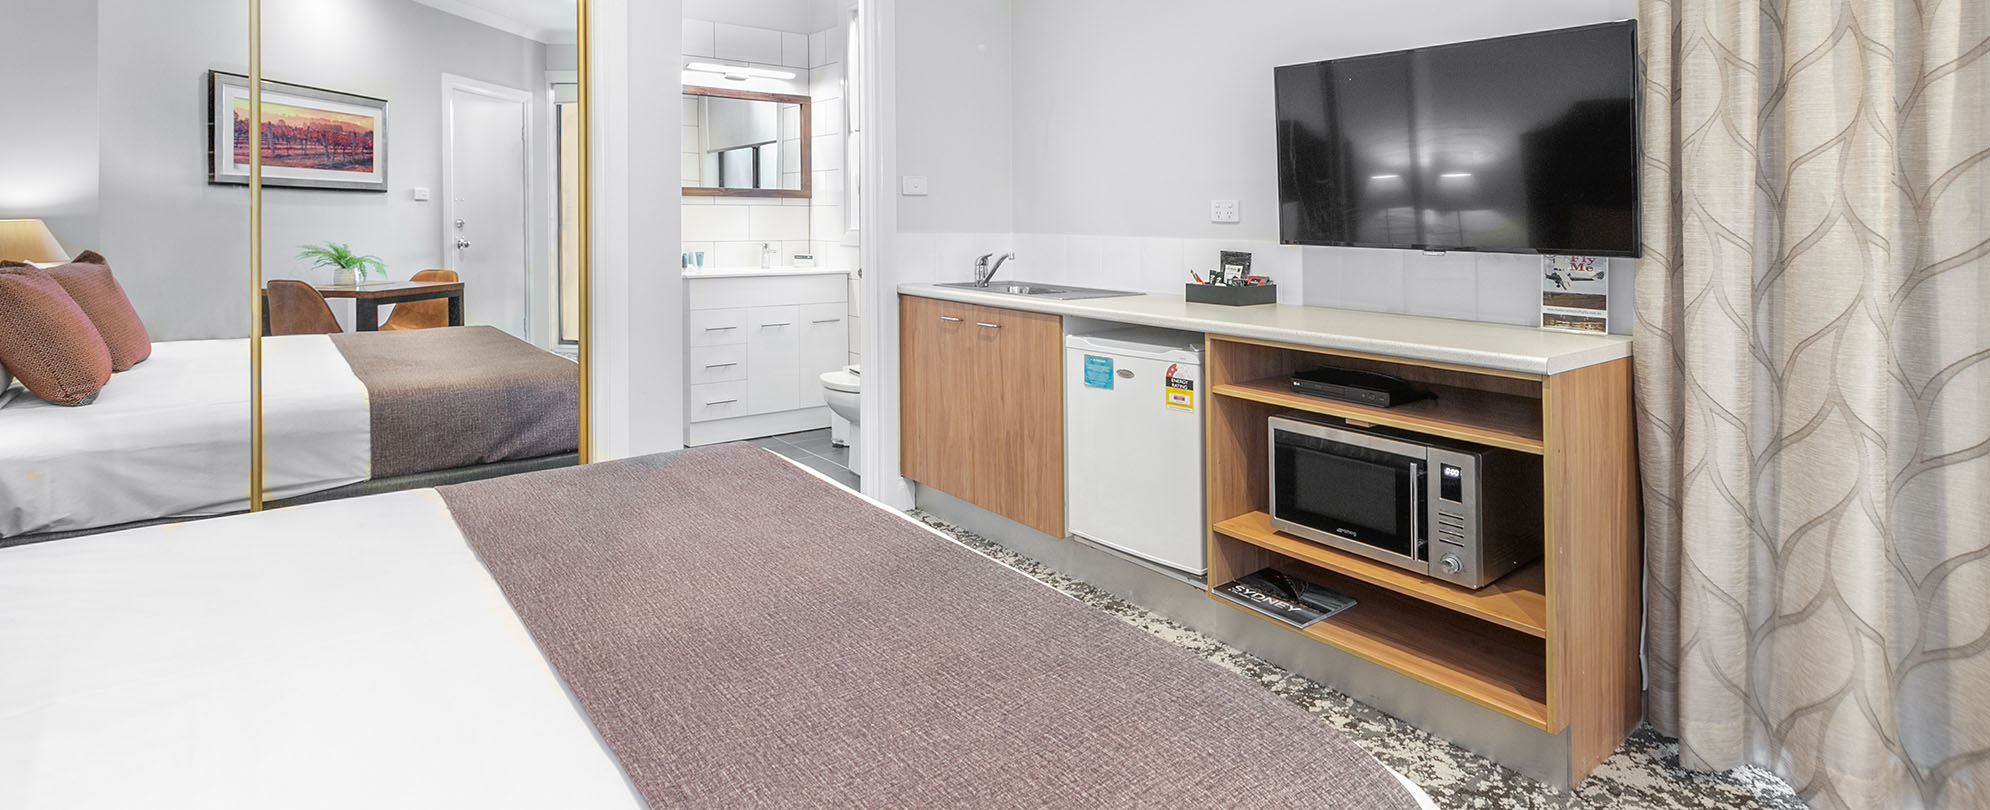 A Club Wyndham Pokolbin Hill studio suite with a bed, flat screen TV, microwave, mini fridge, sink, closet, and bathroom.